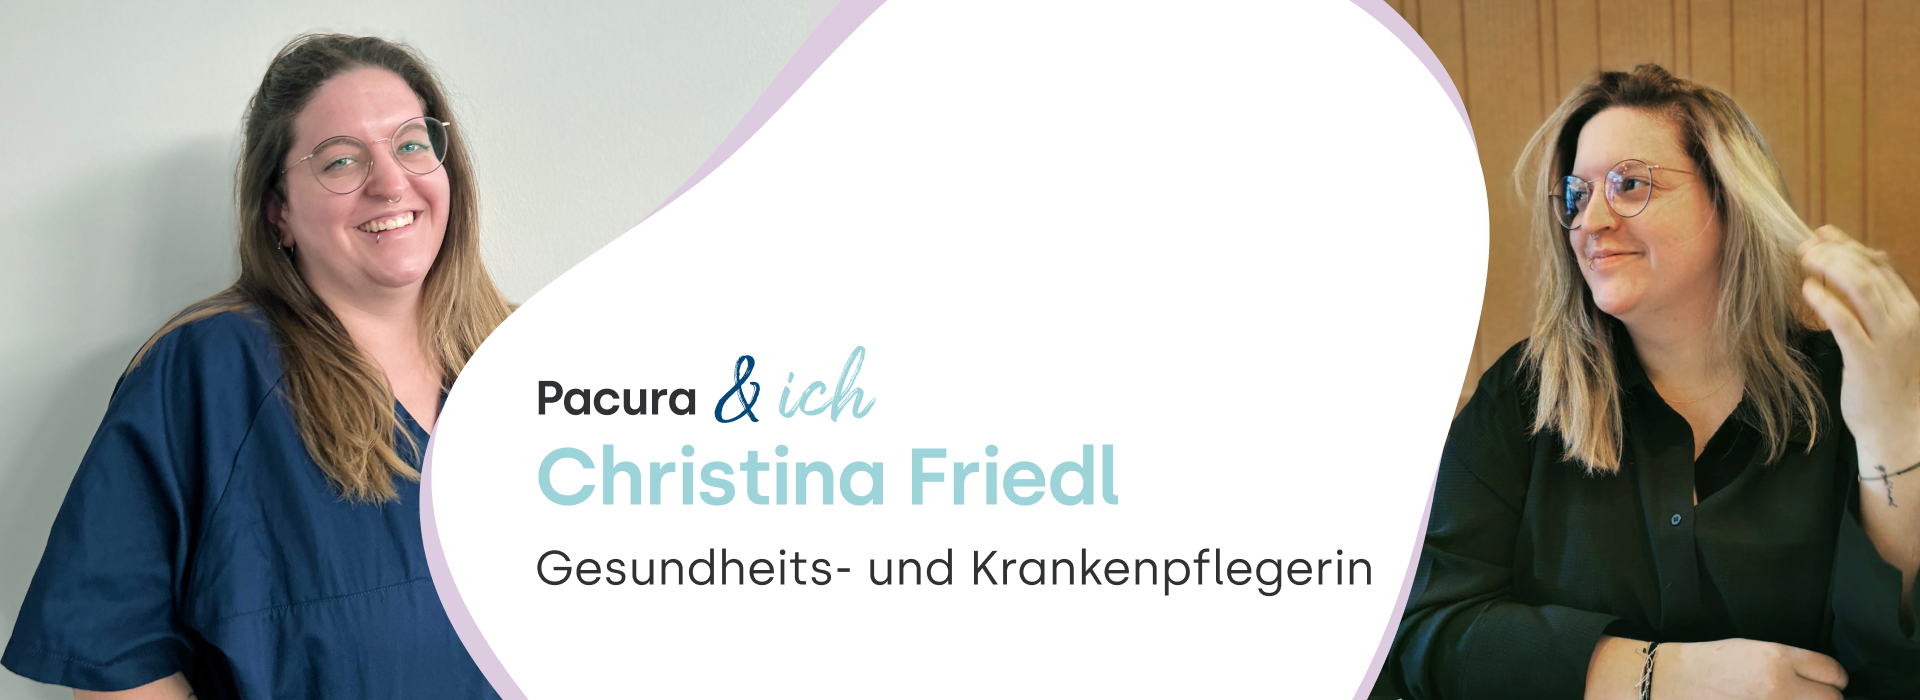 Pacura & ich: Christina Friedl